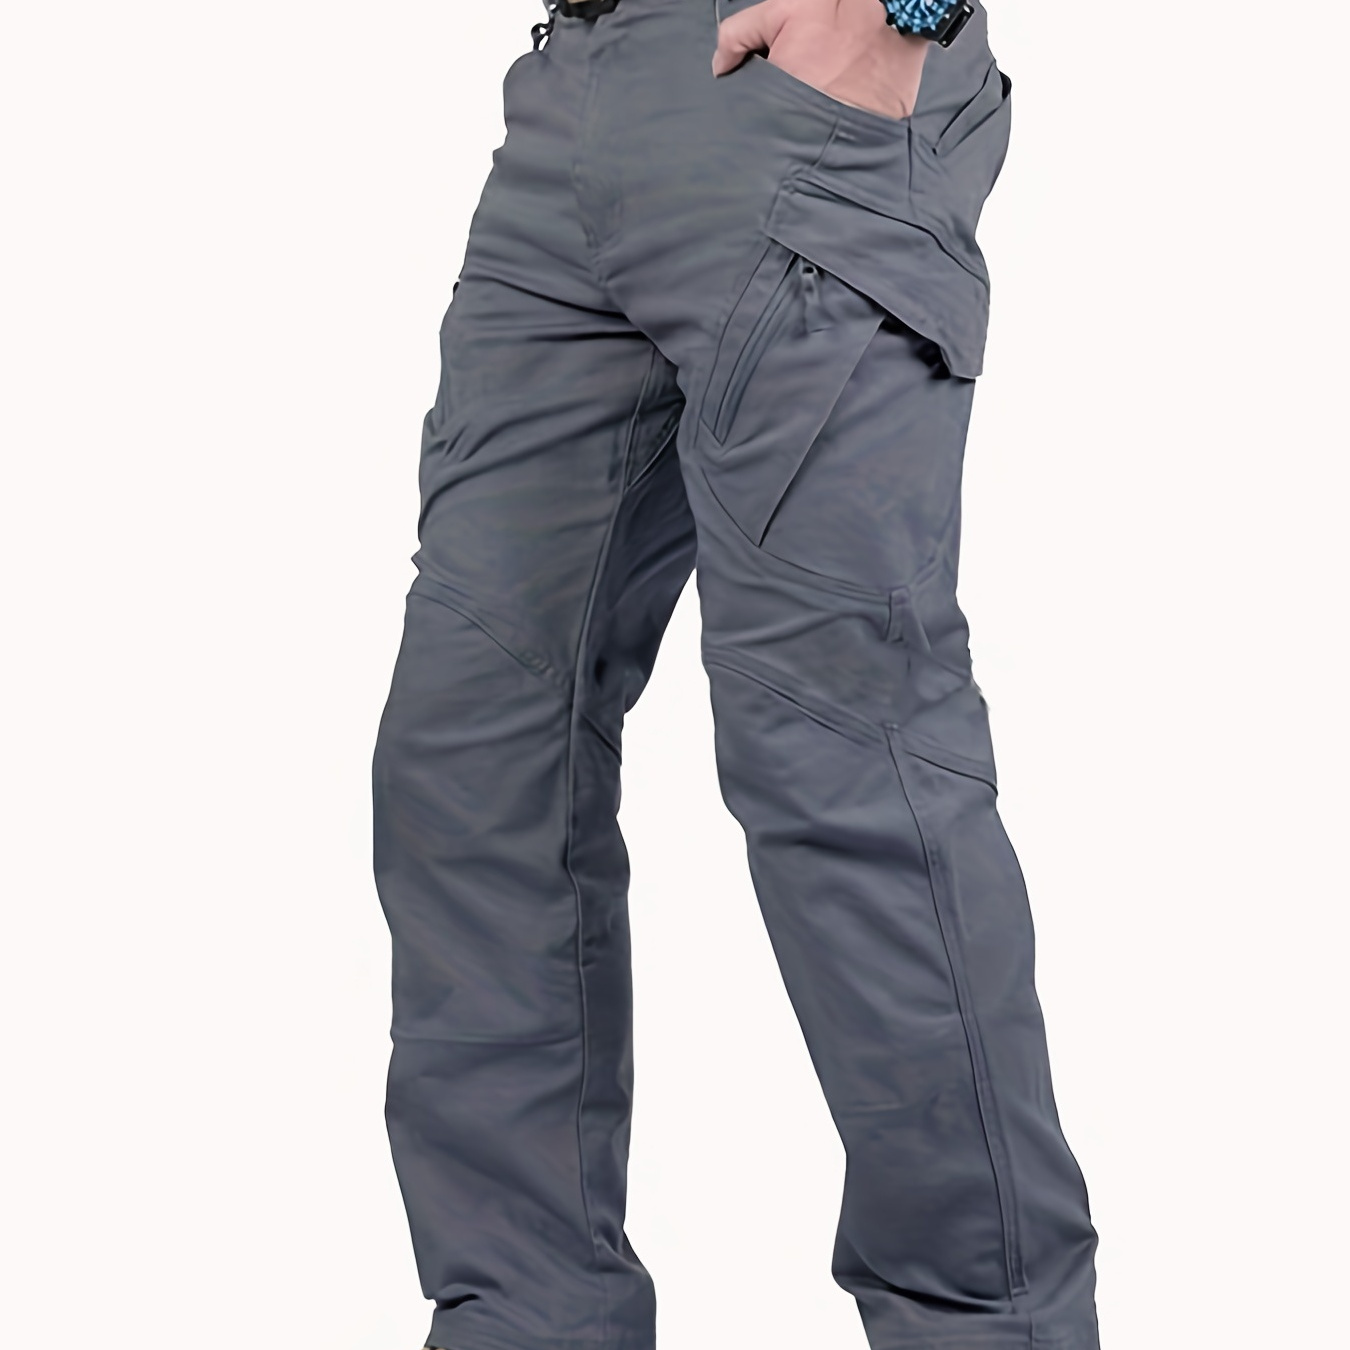 

Men's Outdoor Multi Functional Tactical Pants, Multi Pocket Outdoor Hiking Waterproof Sweatpants, Wear Resistant Cargo Pants